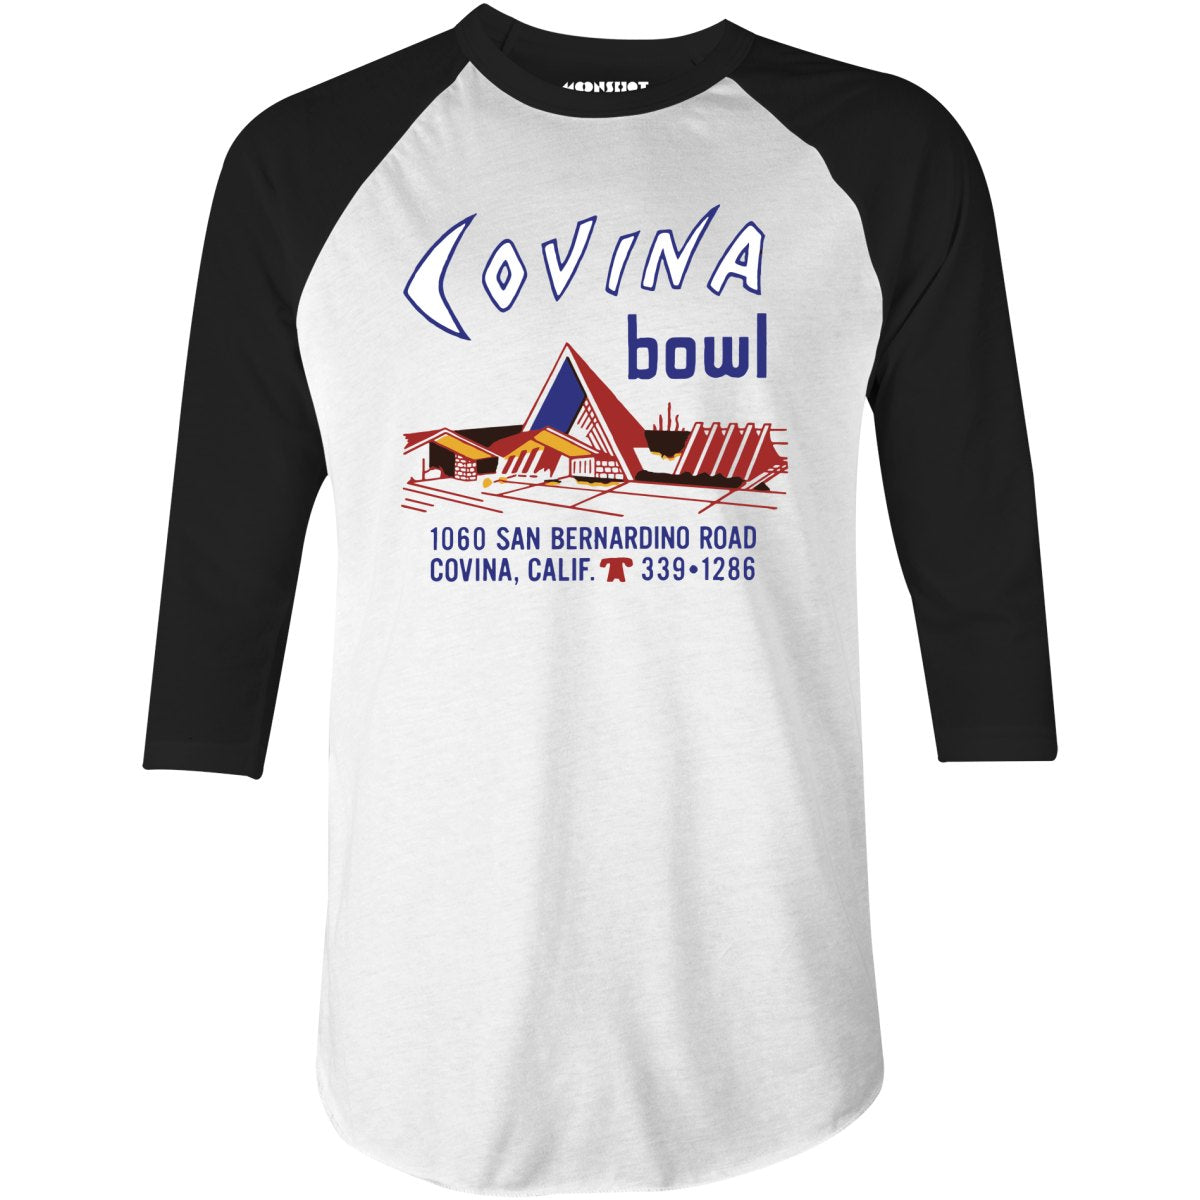 Covina Bowl - Covina, CA - Vintage Bowling Alley - 3/4 Sleeve Raglan T-Shirt